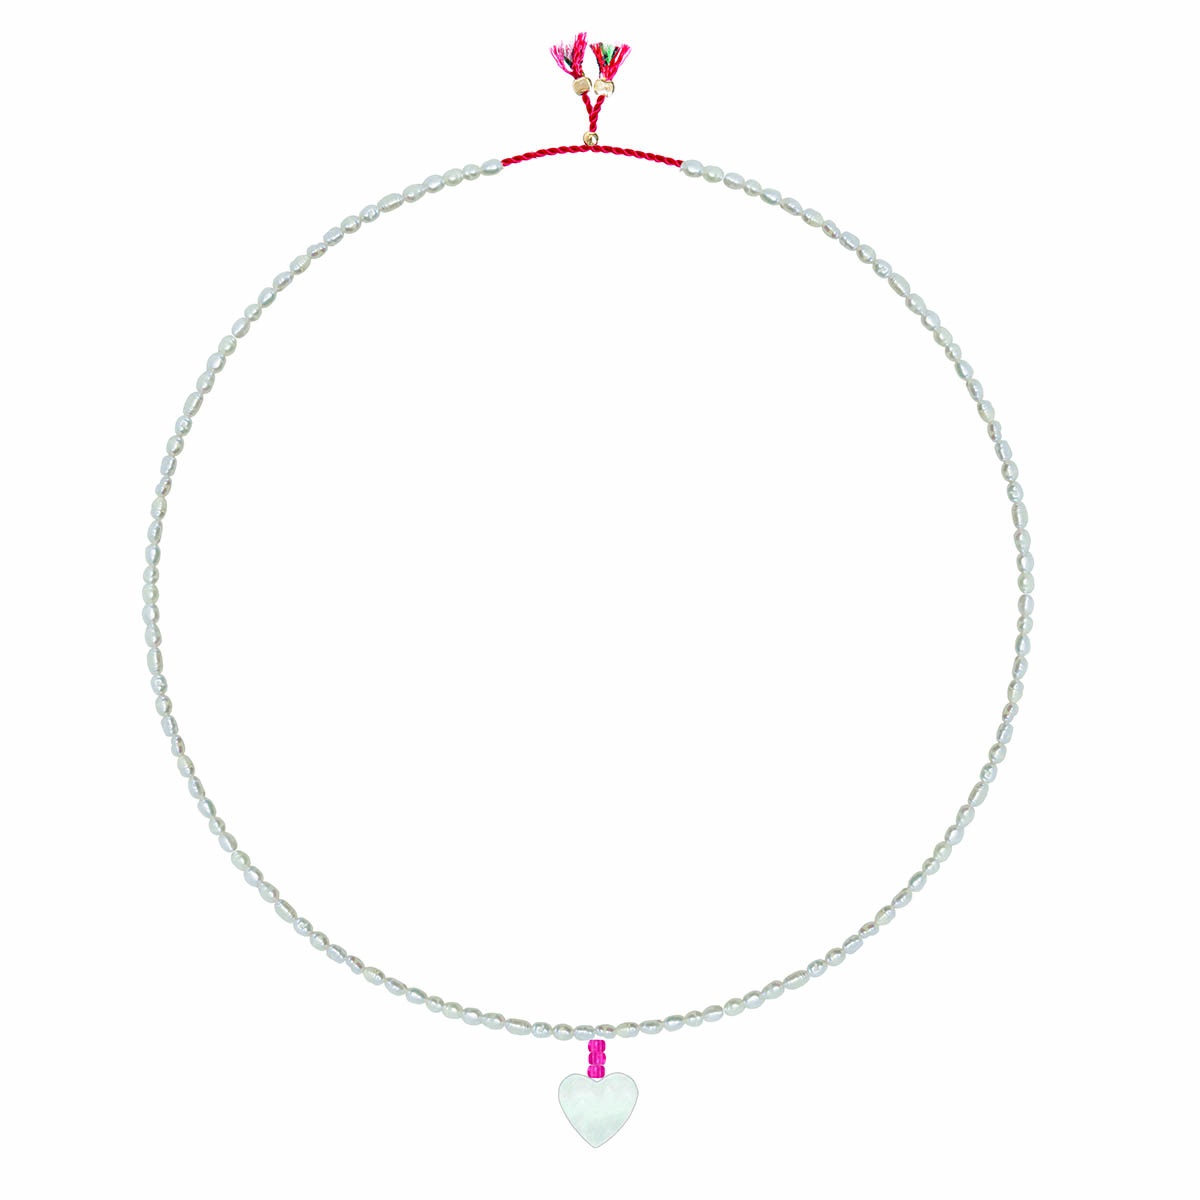 Sorbet Island Mini Freshwater Pearl & Pendant Necklace Neon Pink Heart